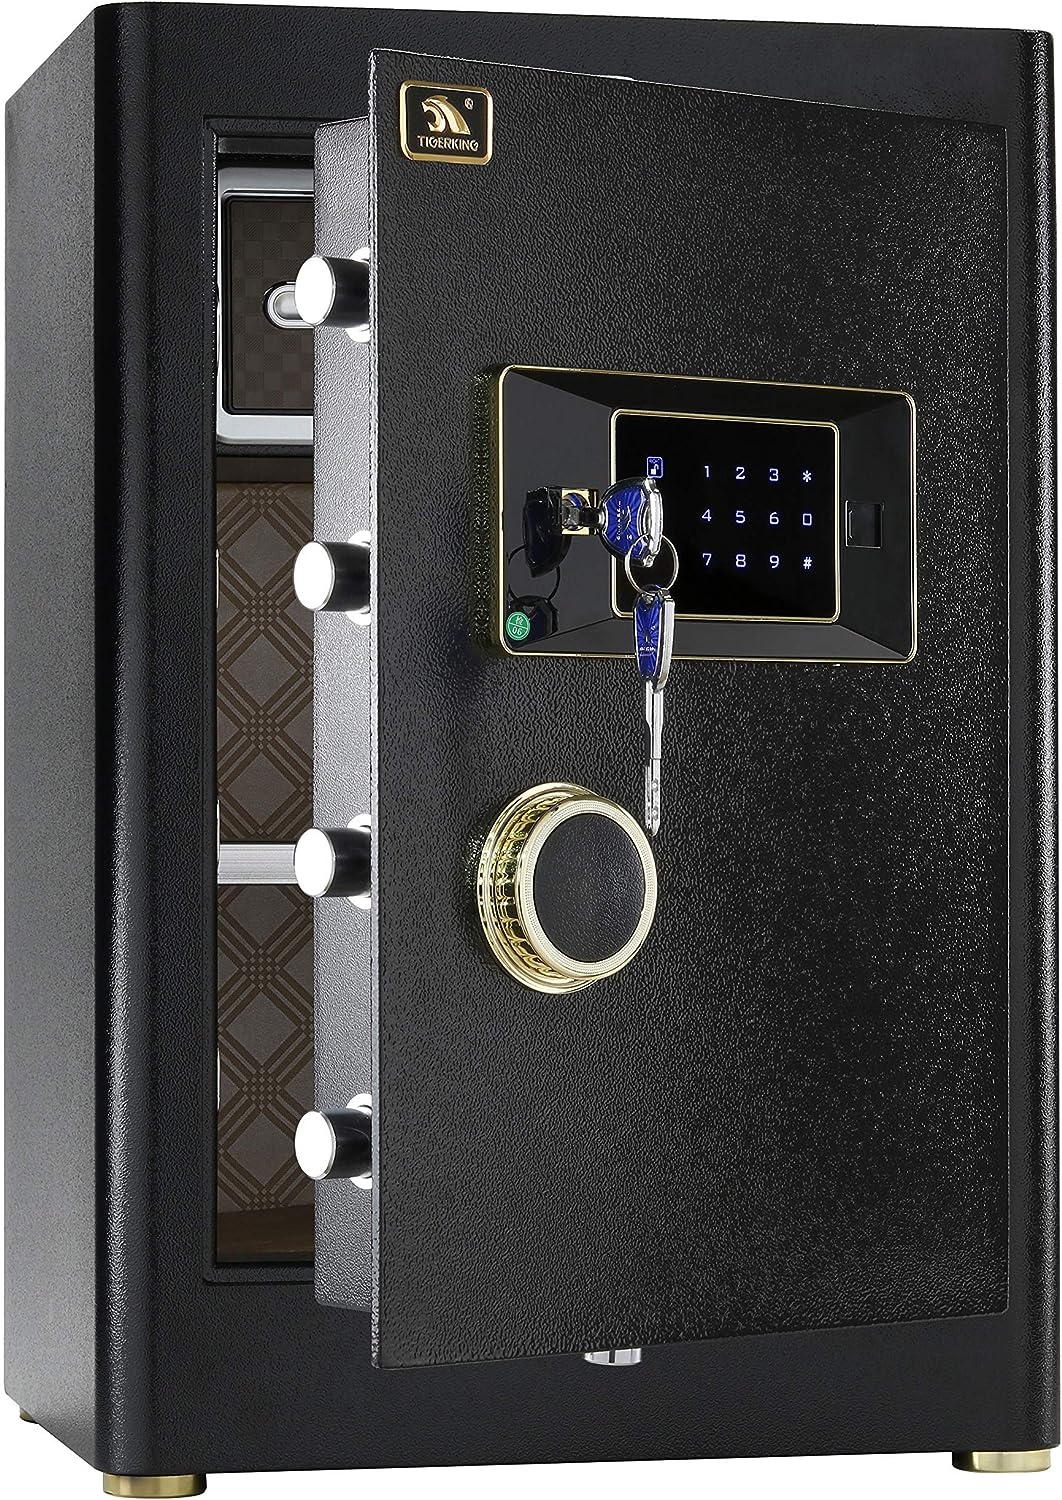 TIGERKING Security Jewelry Safe | DeviceDaily.com